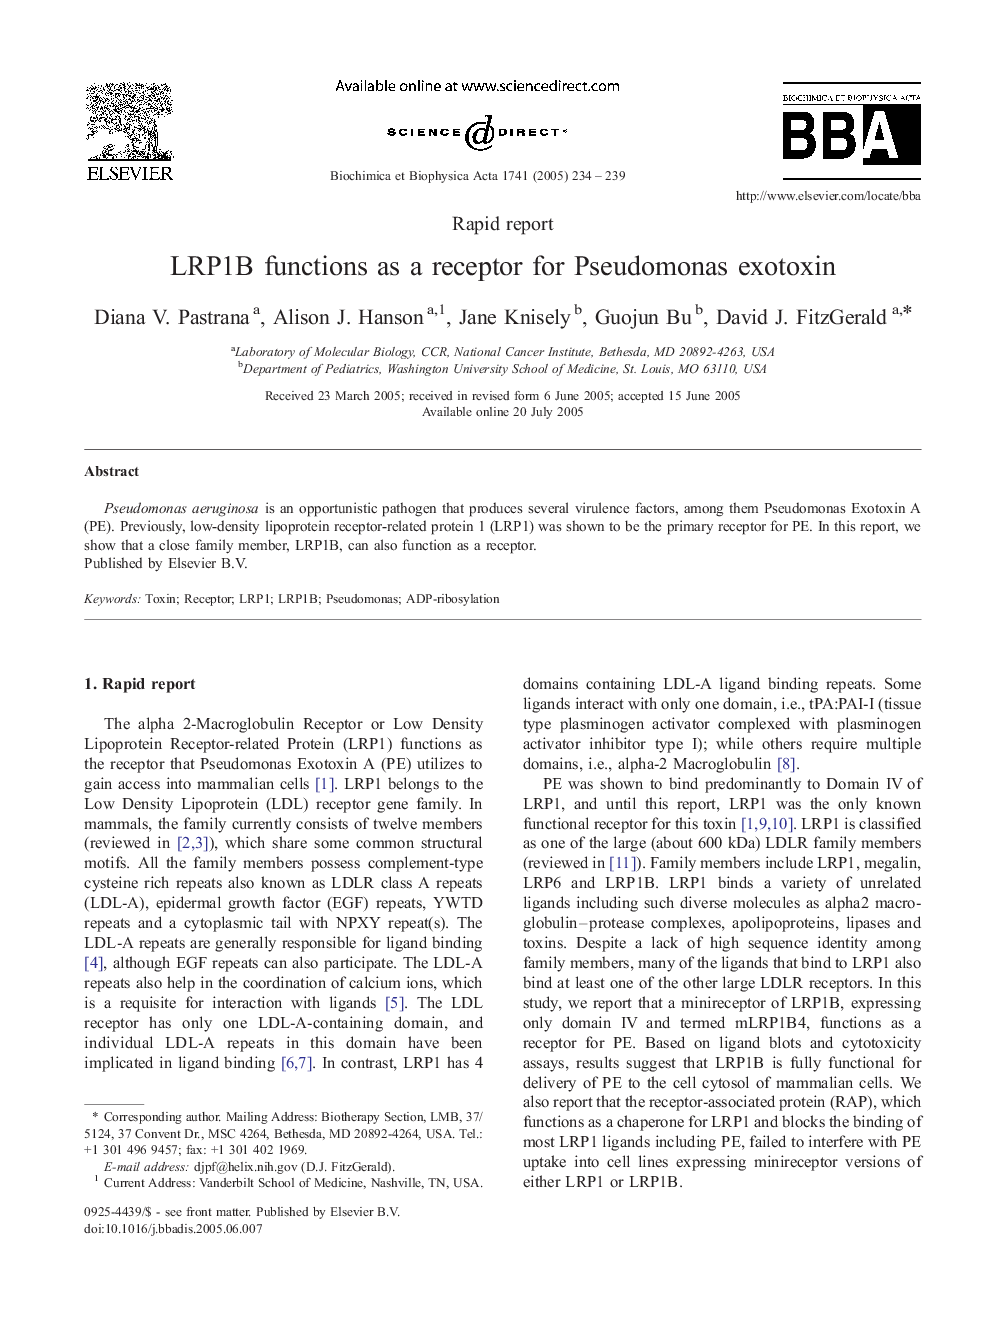 LRP1B functions as a receptor for Pseudomonas exotoxin